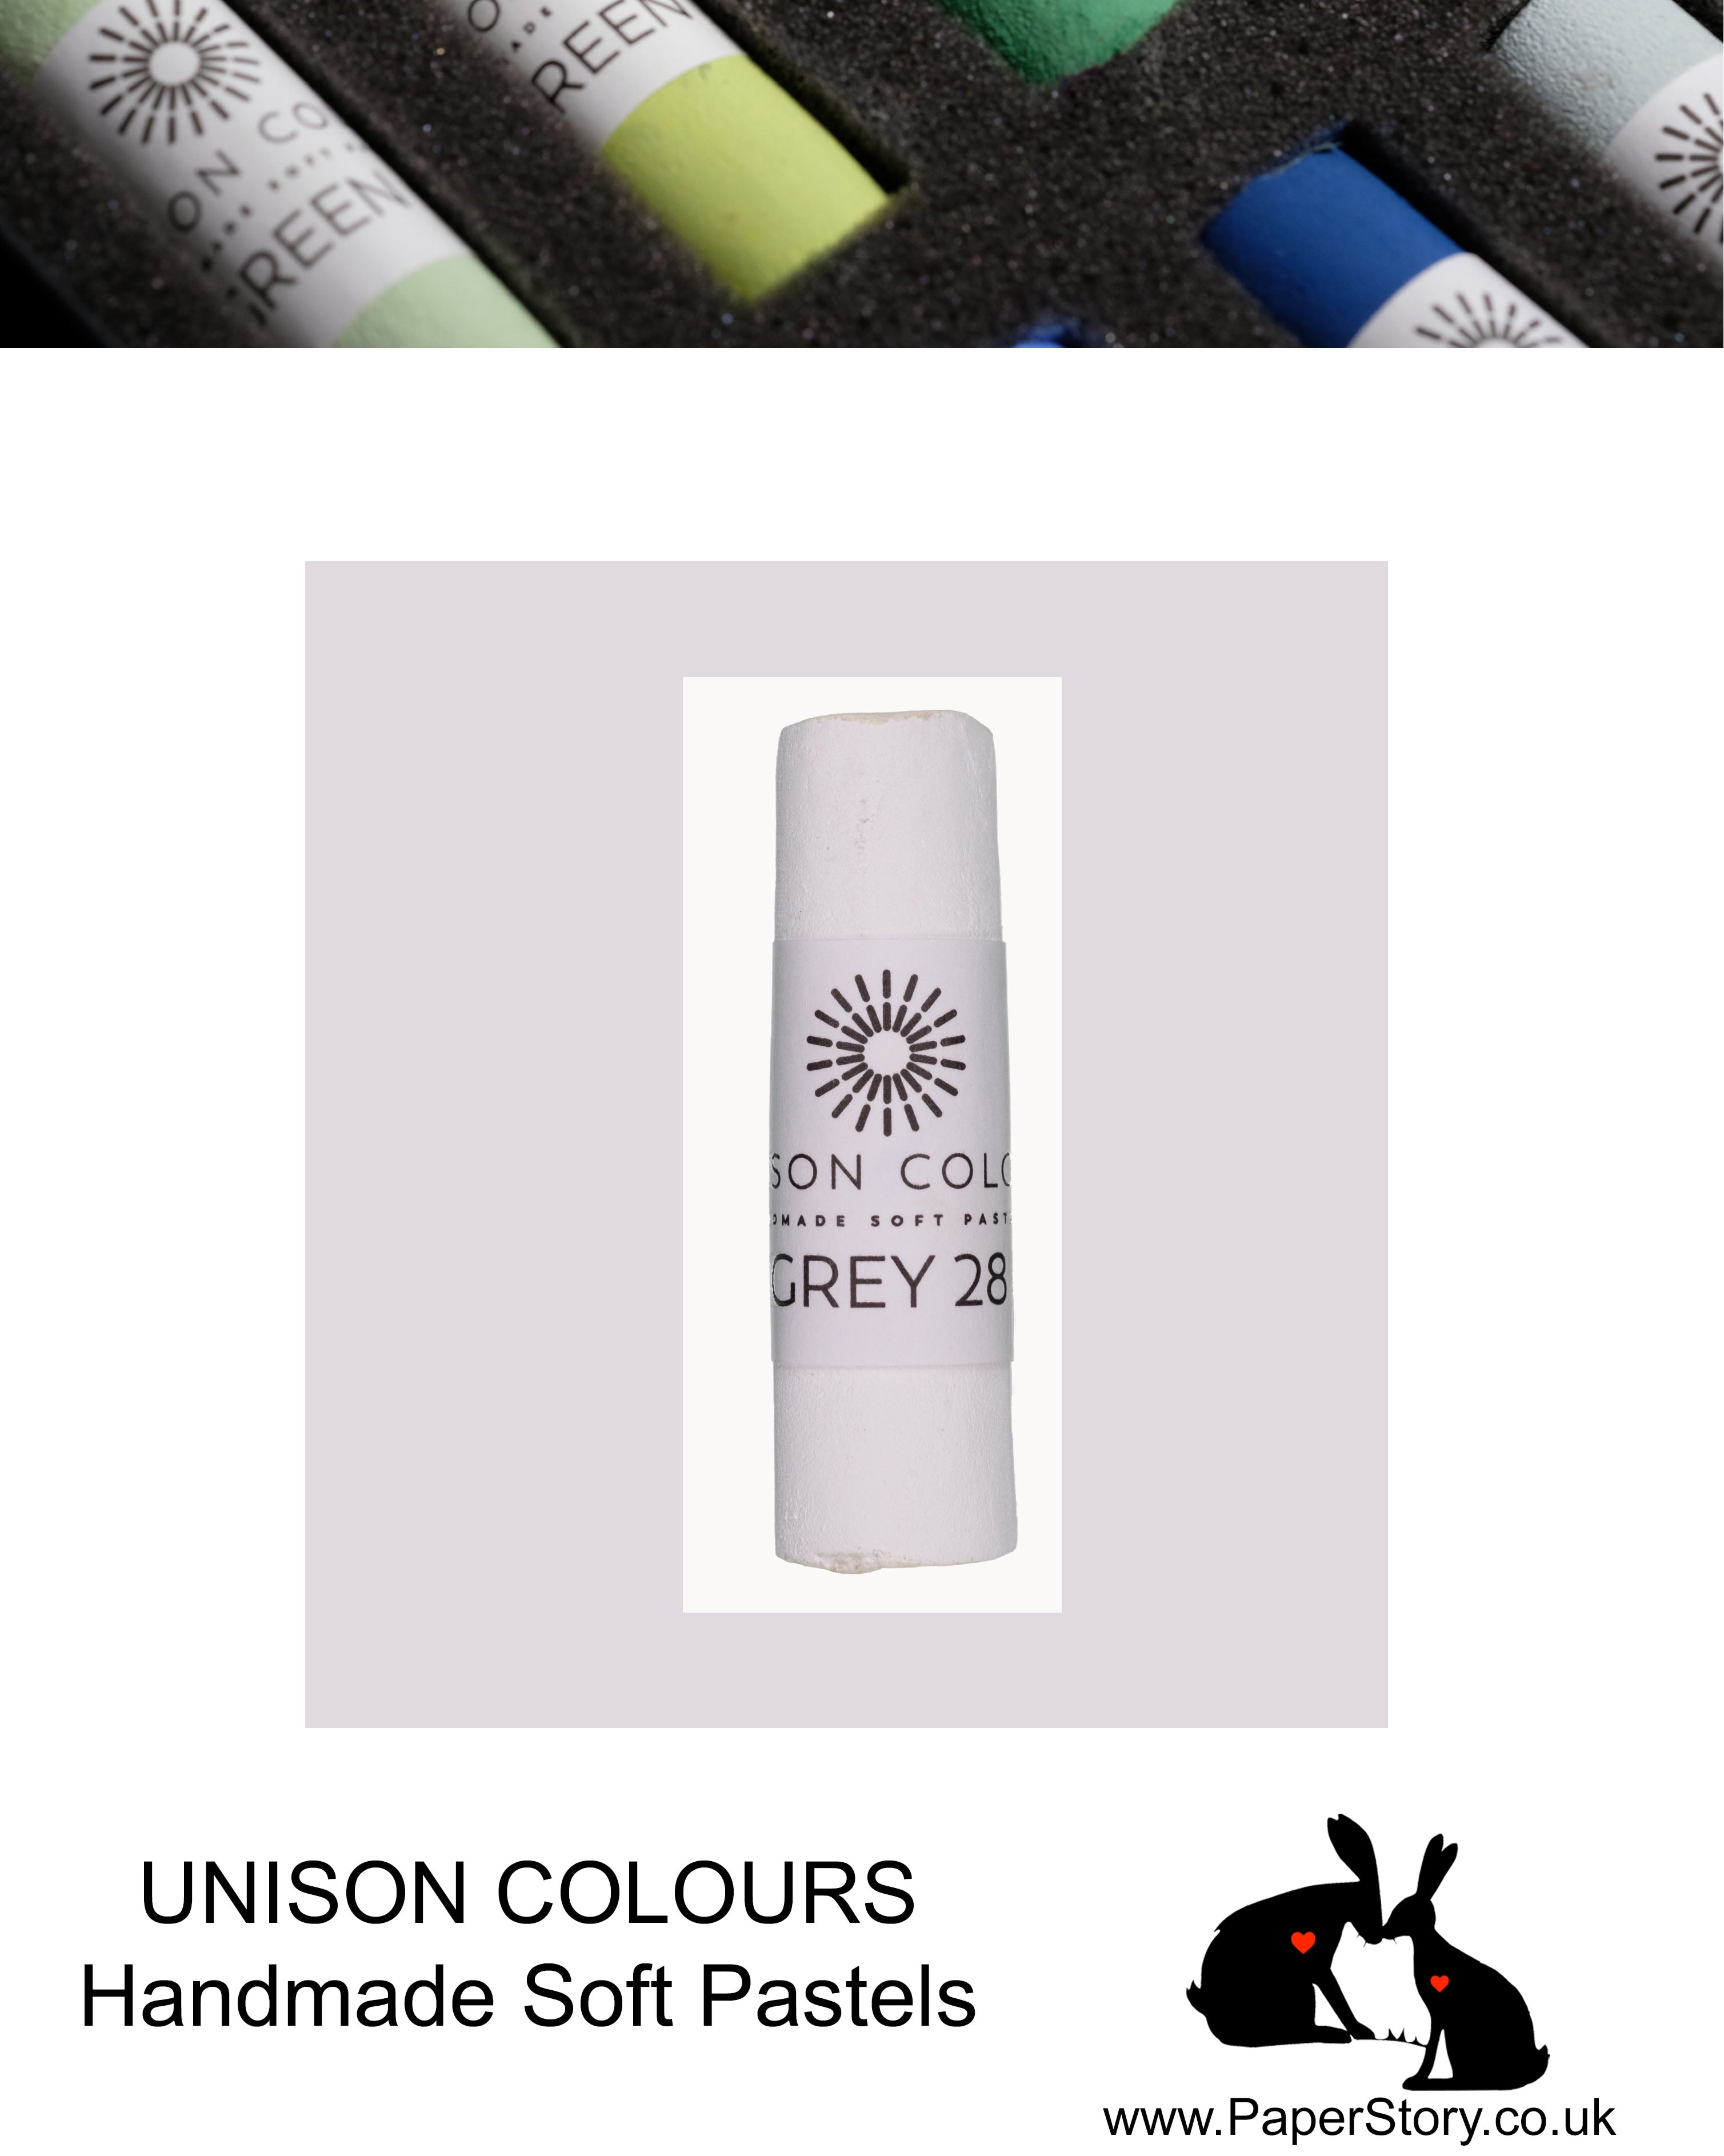 Unison Colour Handmade Soft Pastels Grey 28 - Size Regular